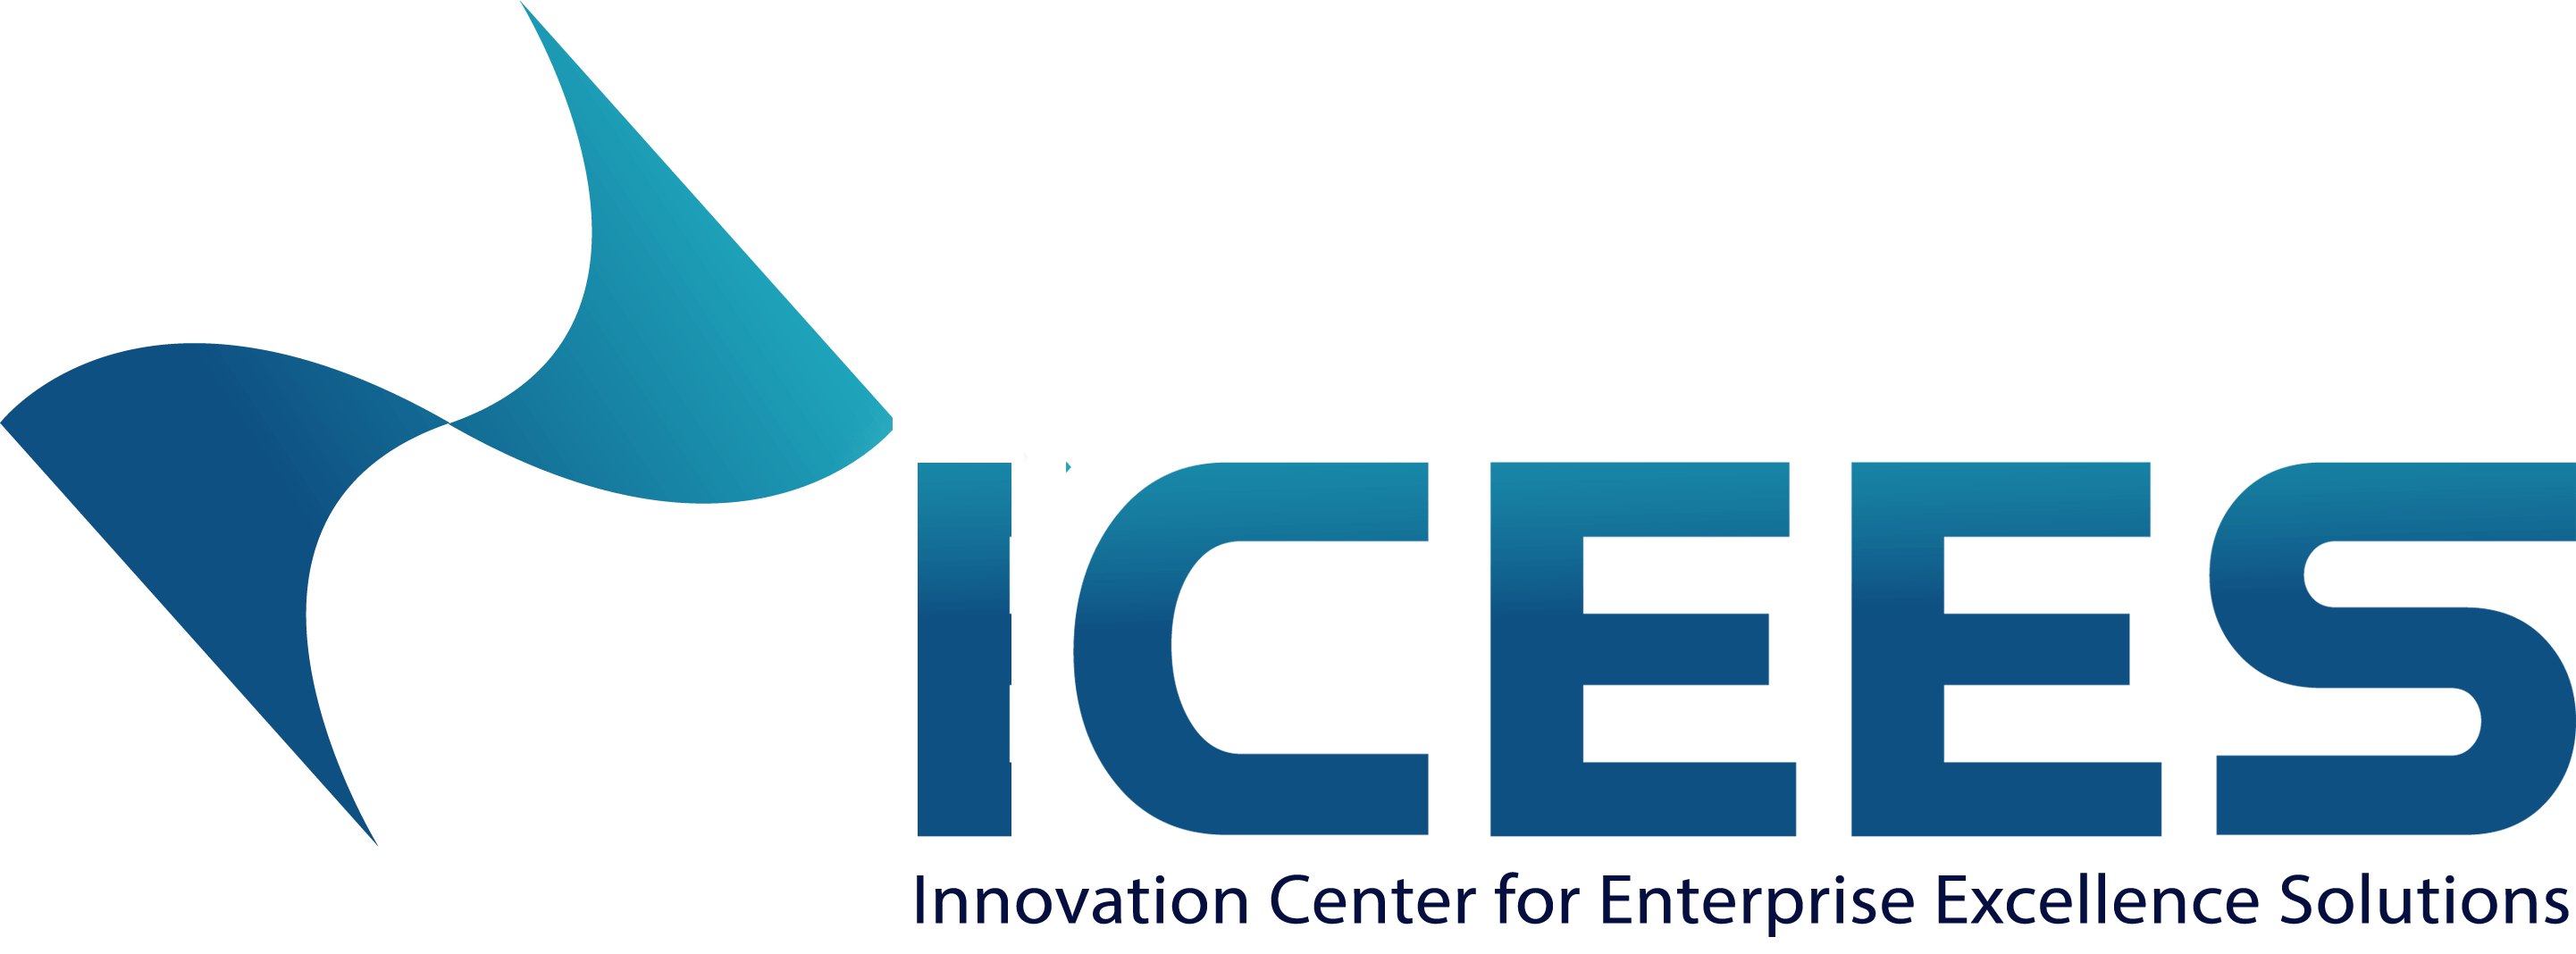 icees-logo-2